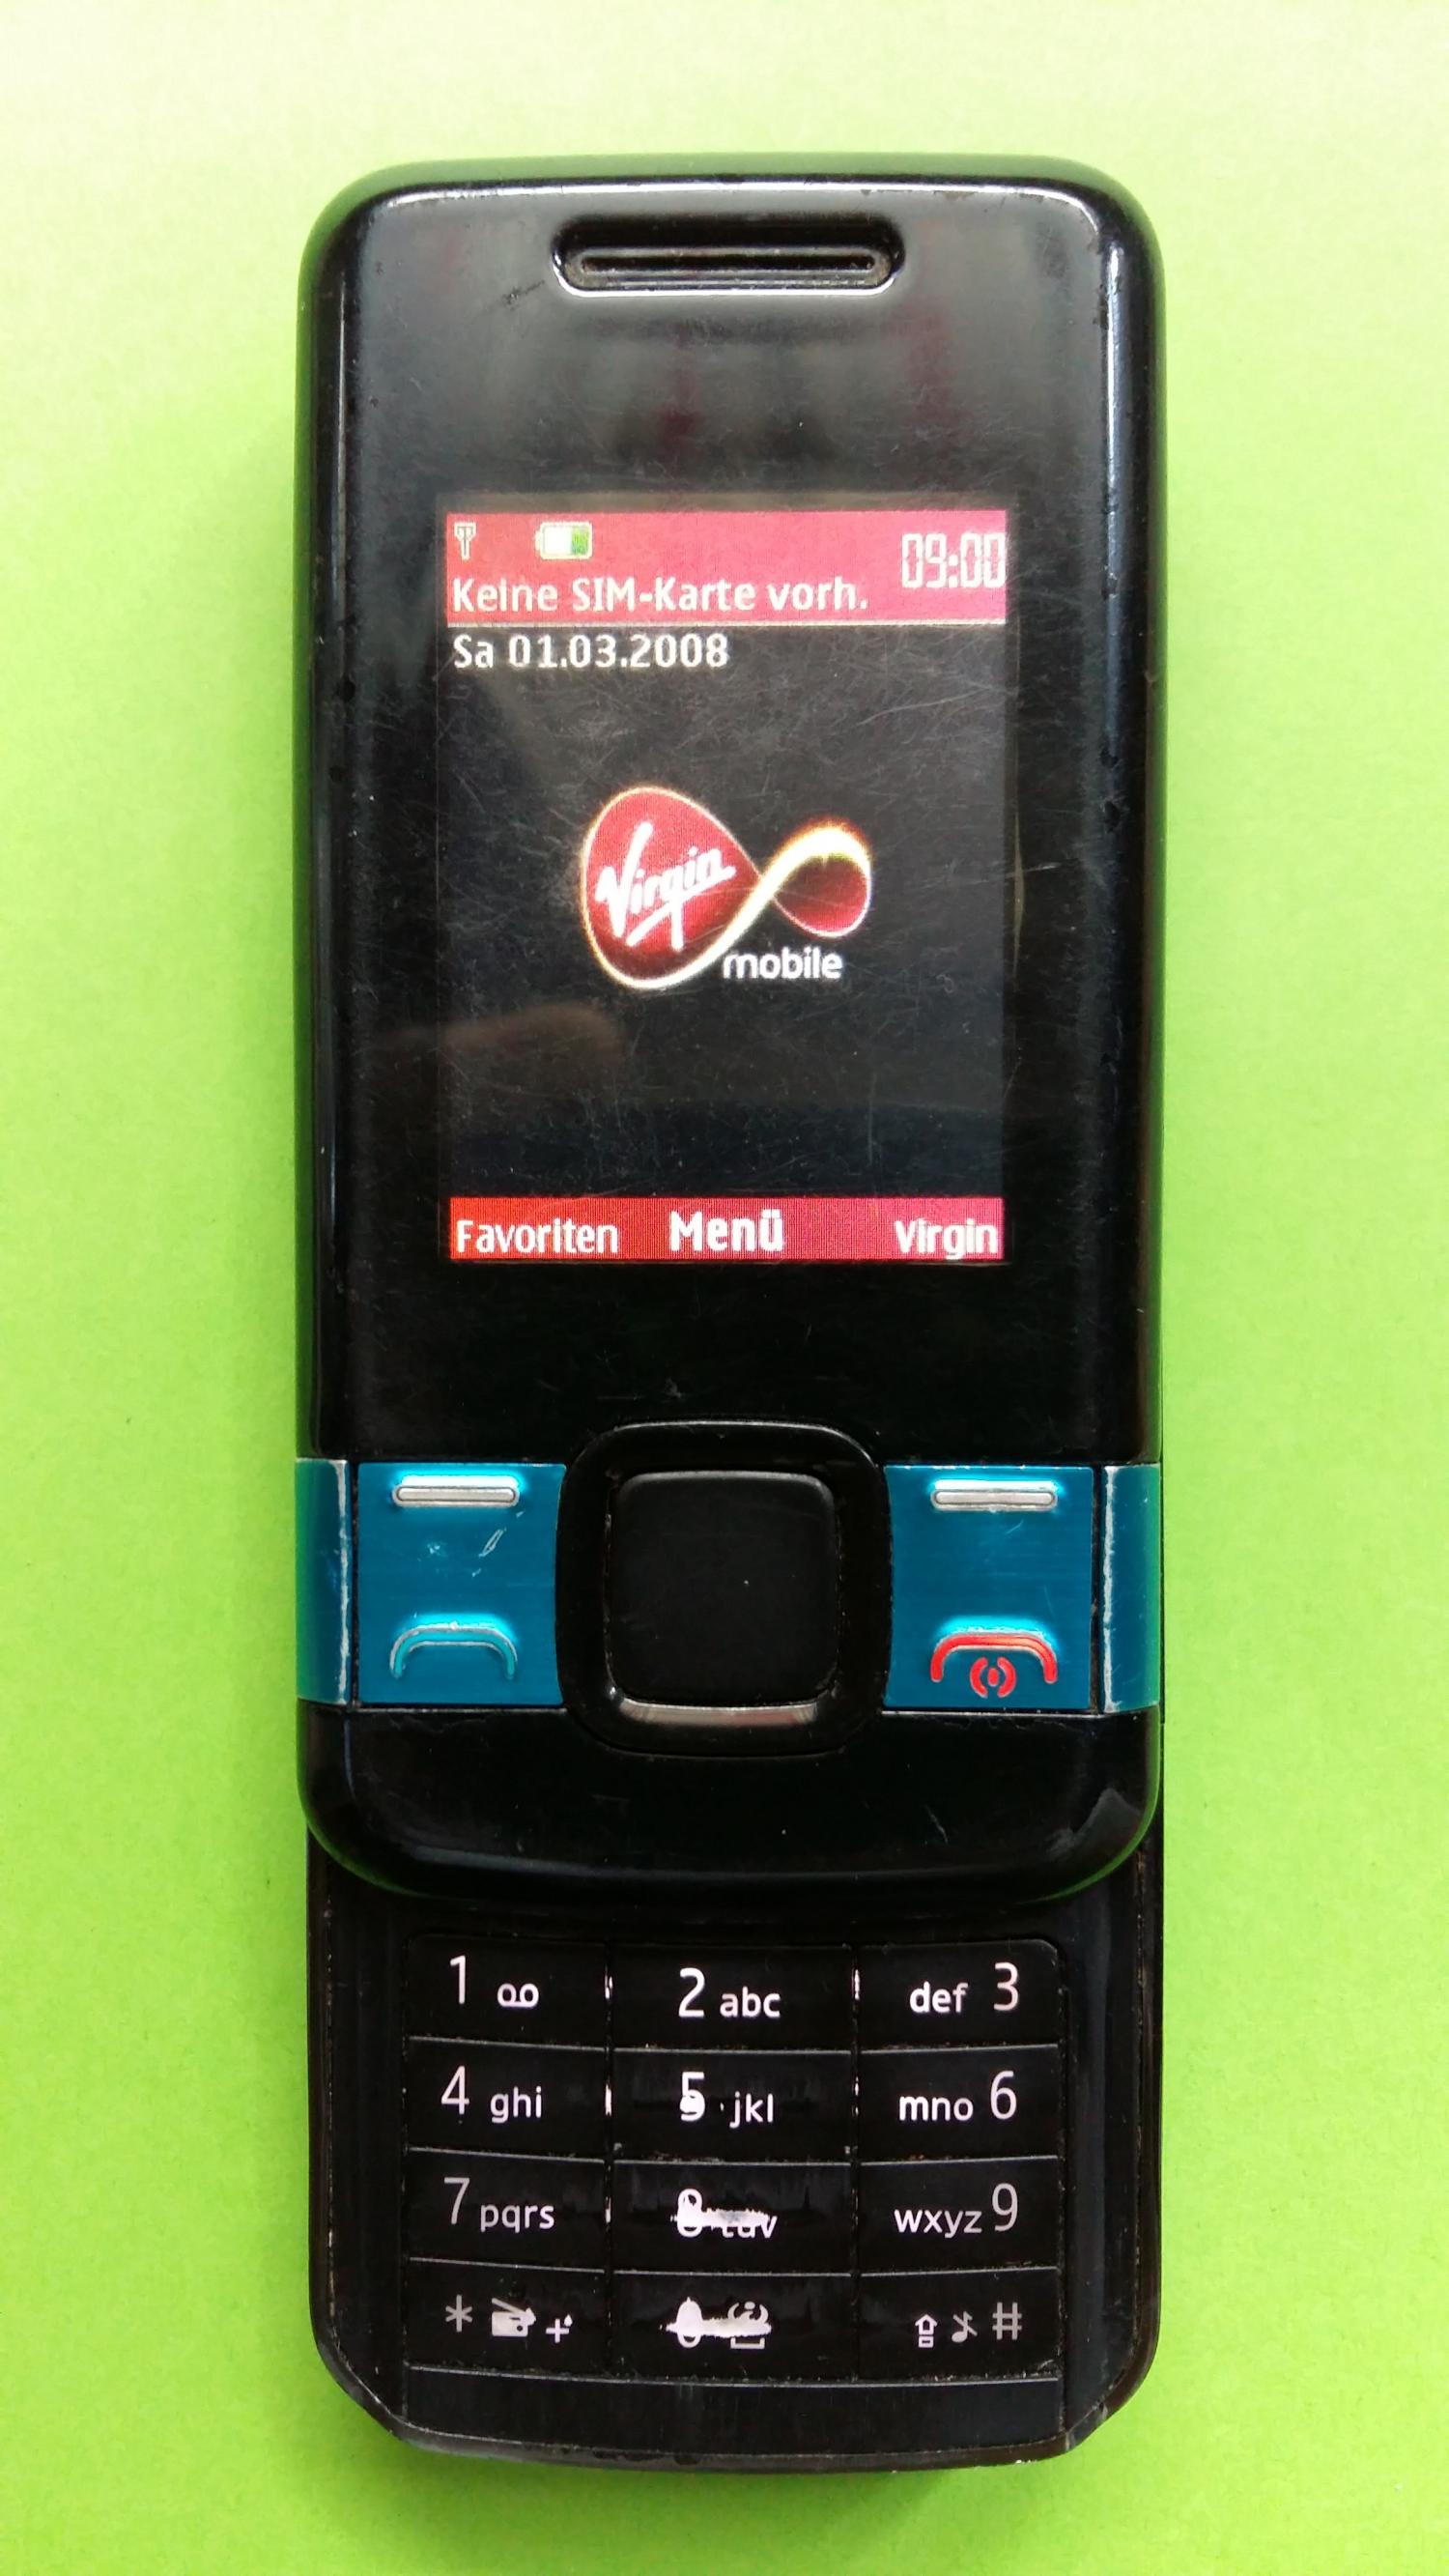 image-7321424-Nokia 7100S-2 Supernova (2)2.jpg